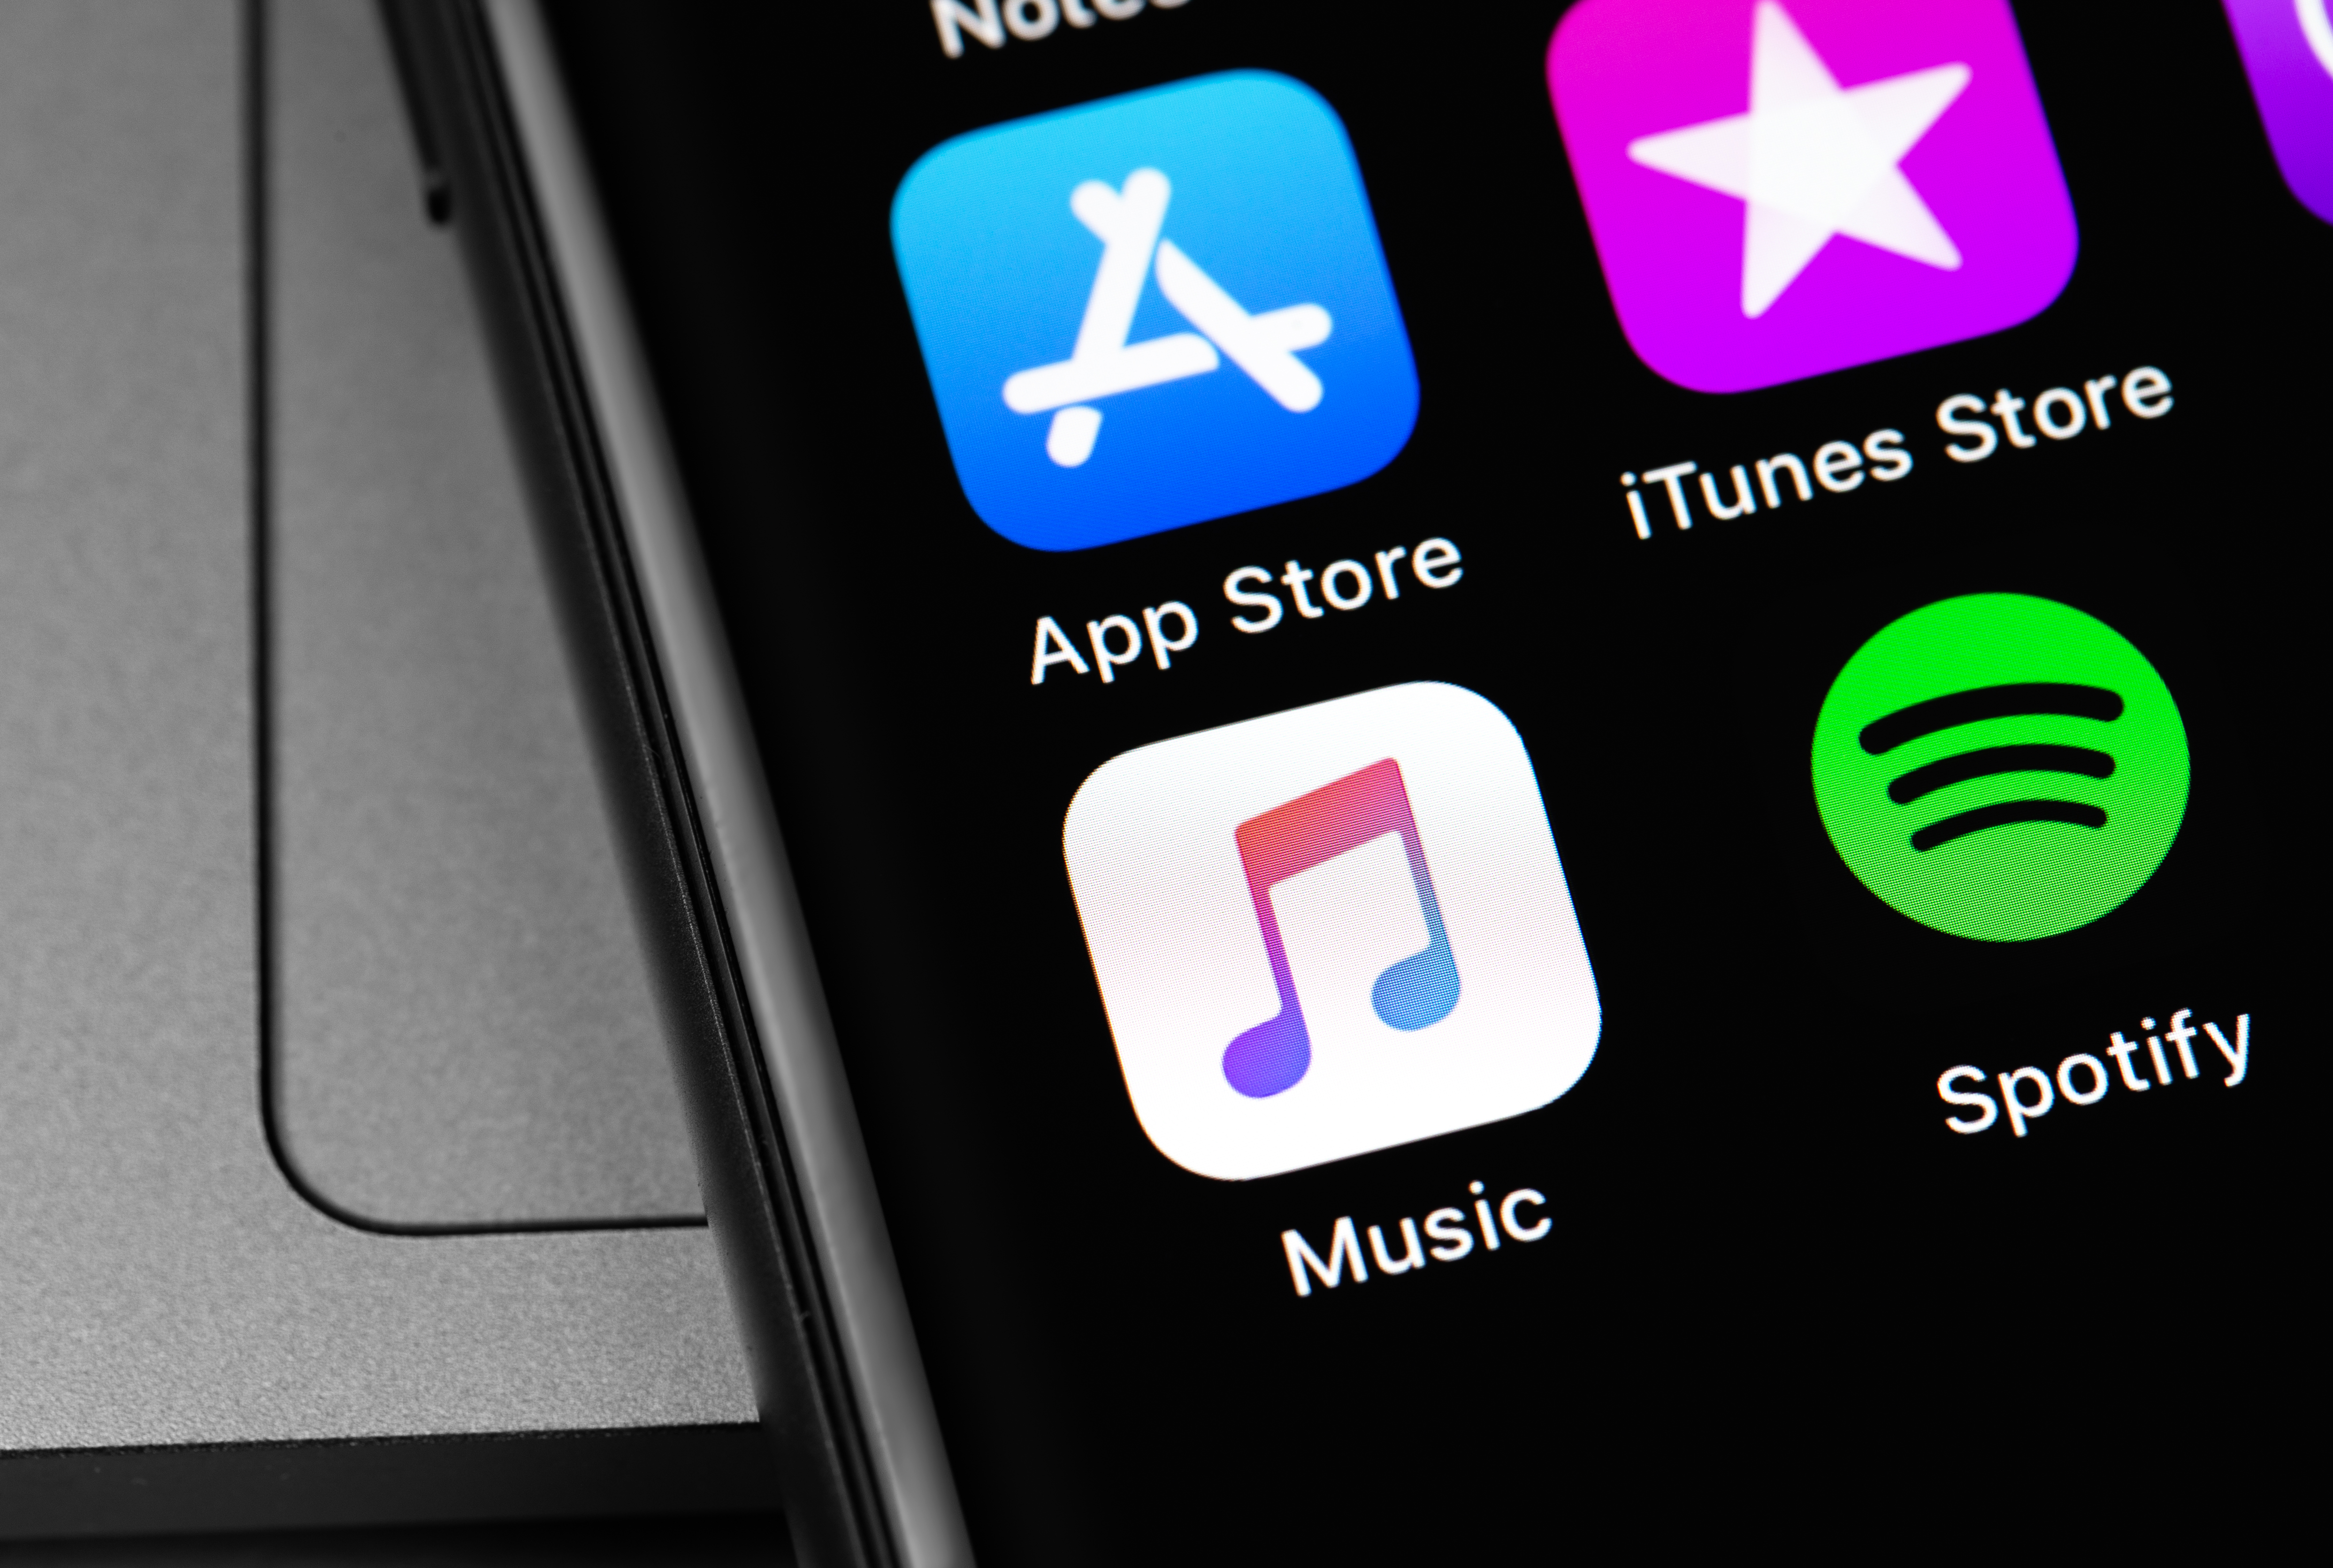 Apple Music app on an iPhone screen